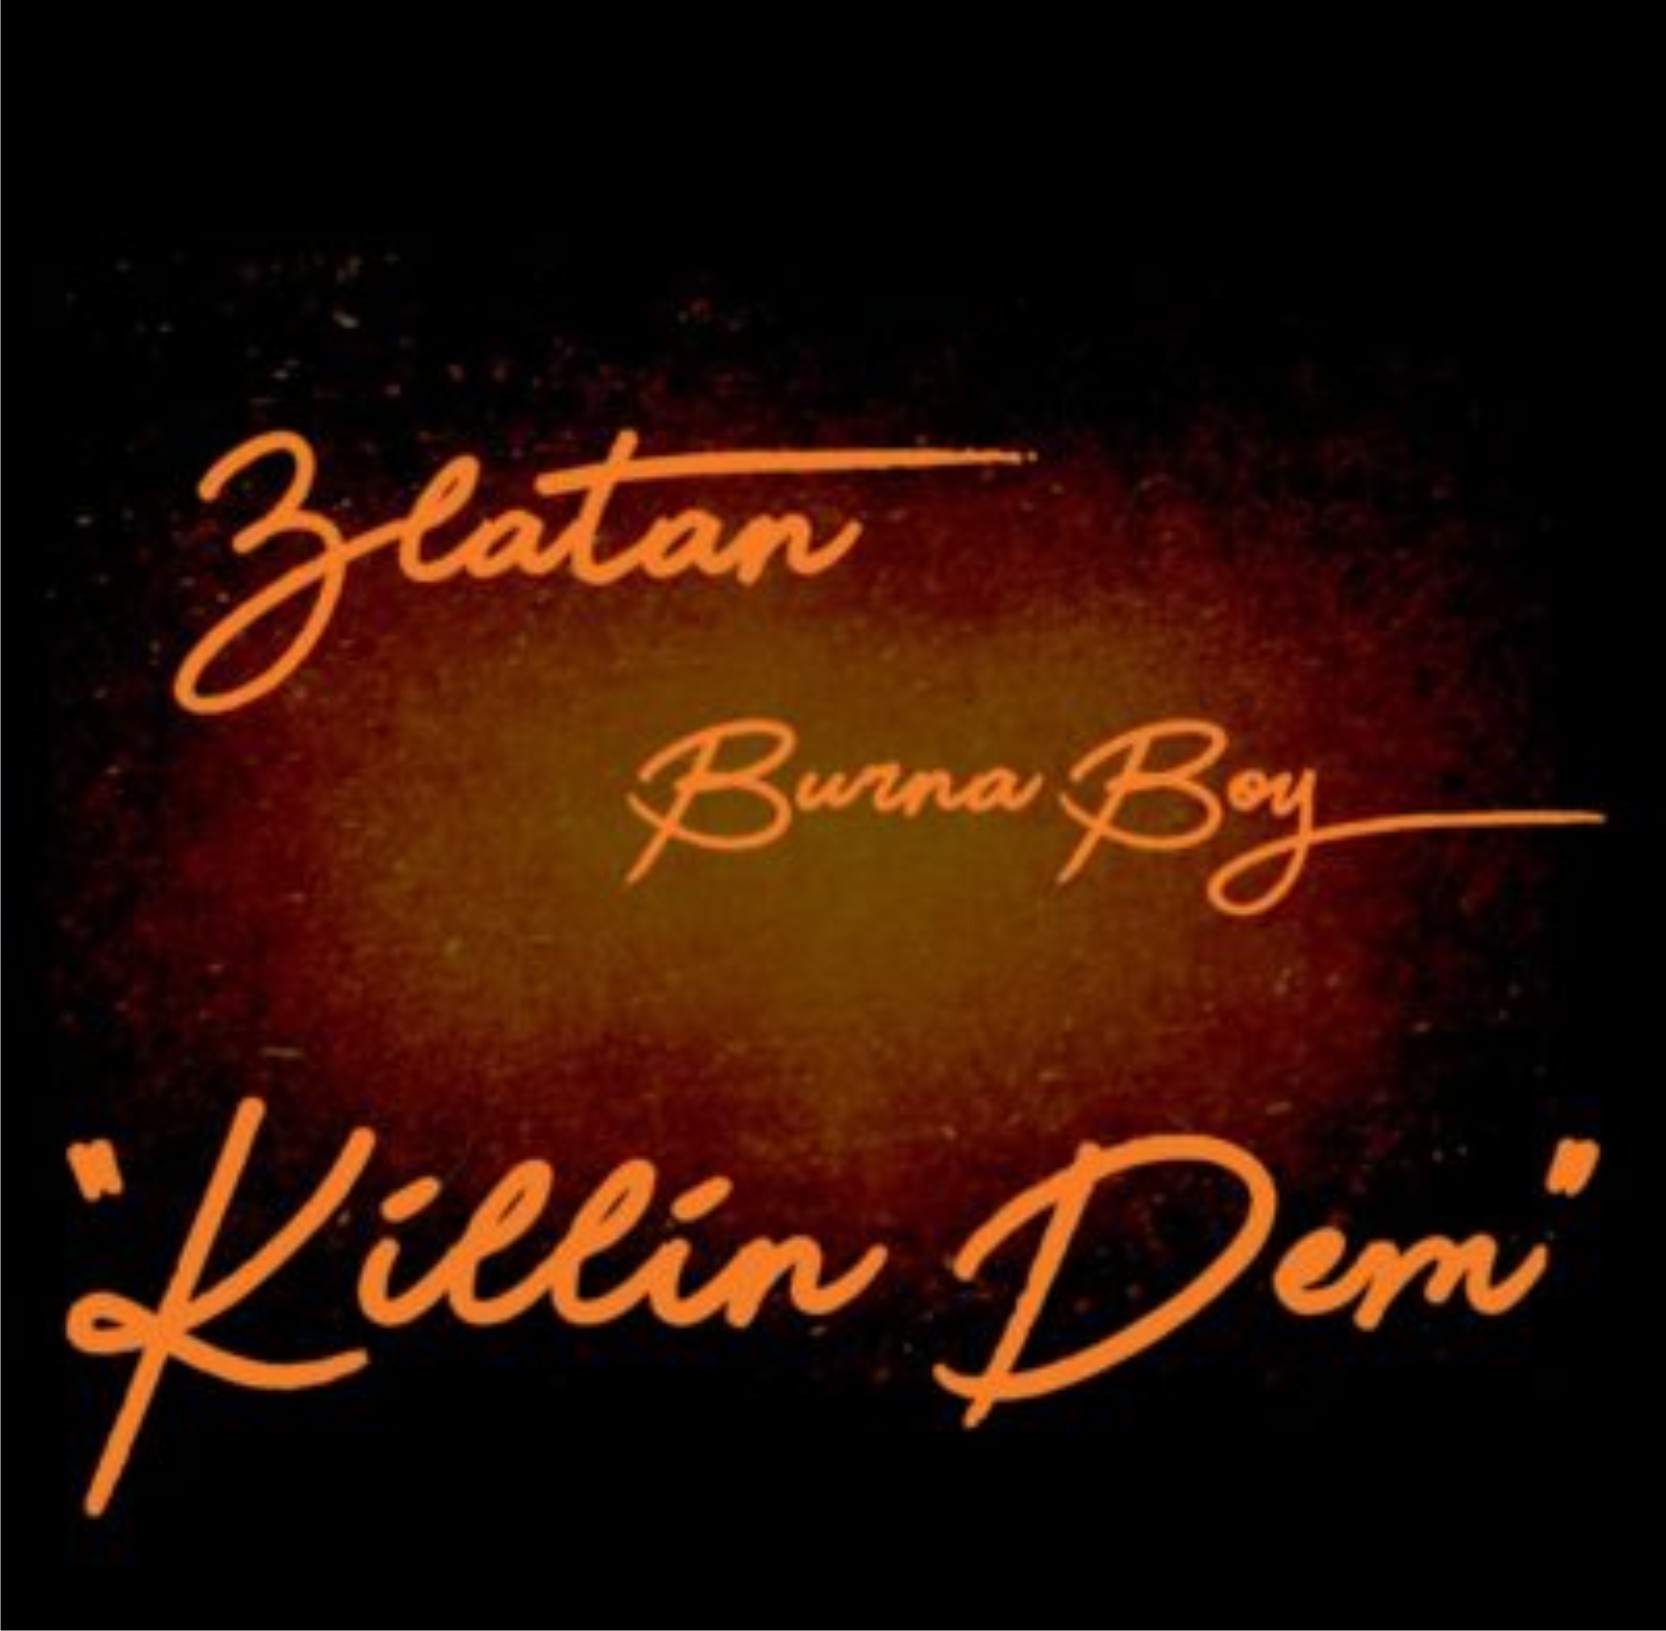 Burna Boy – “Killin Dem” ft. Zlatan